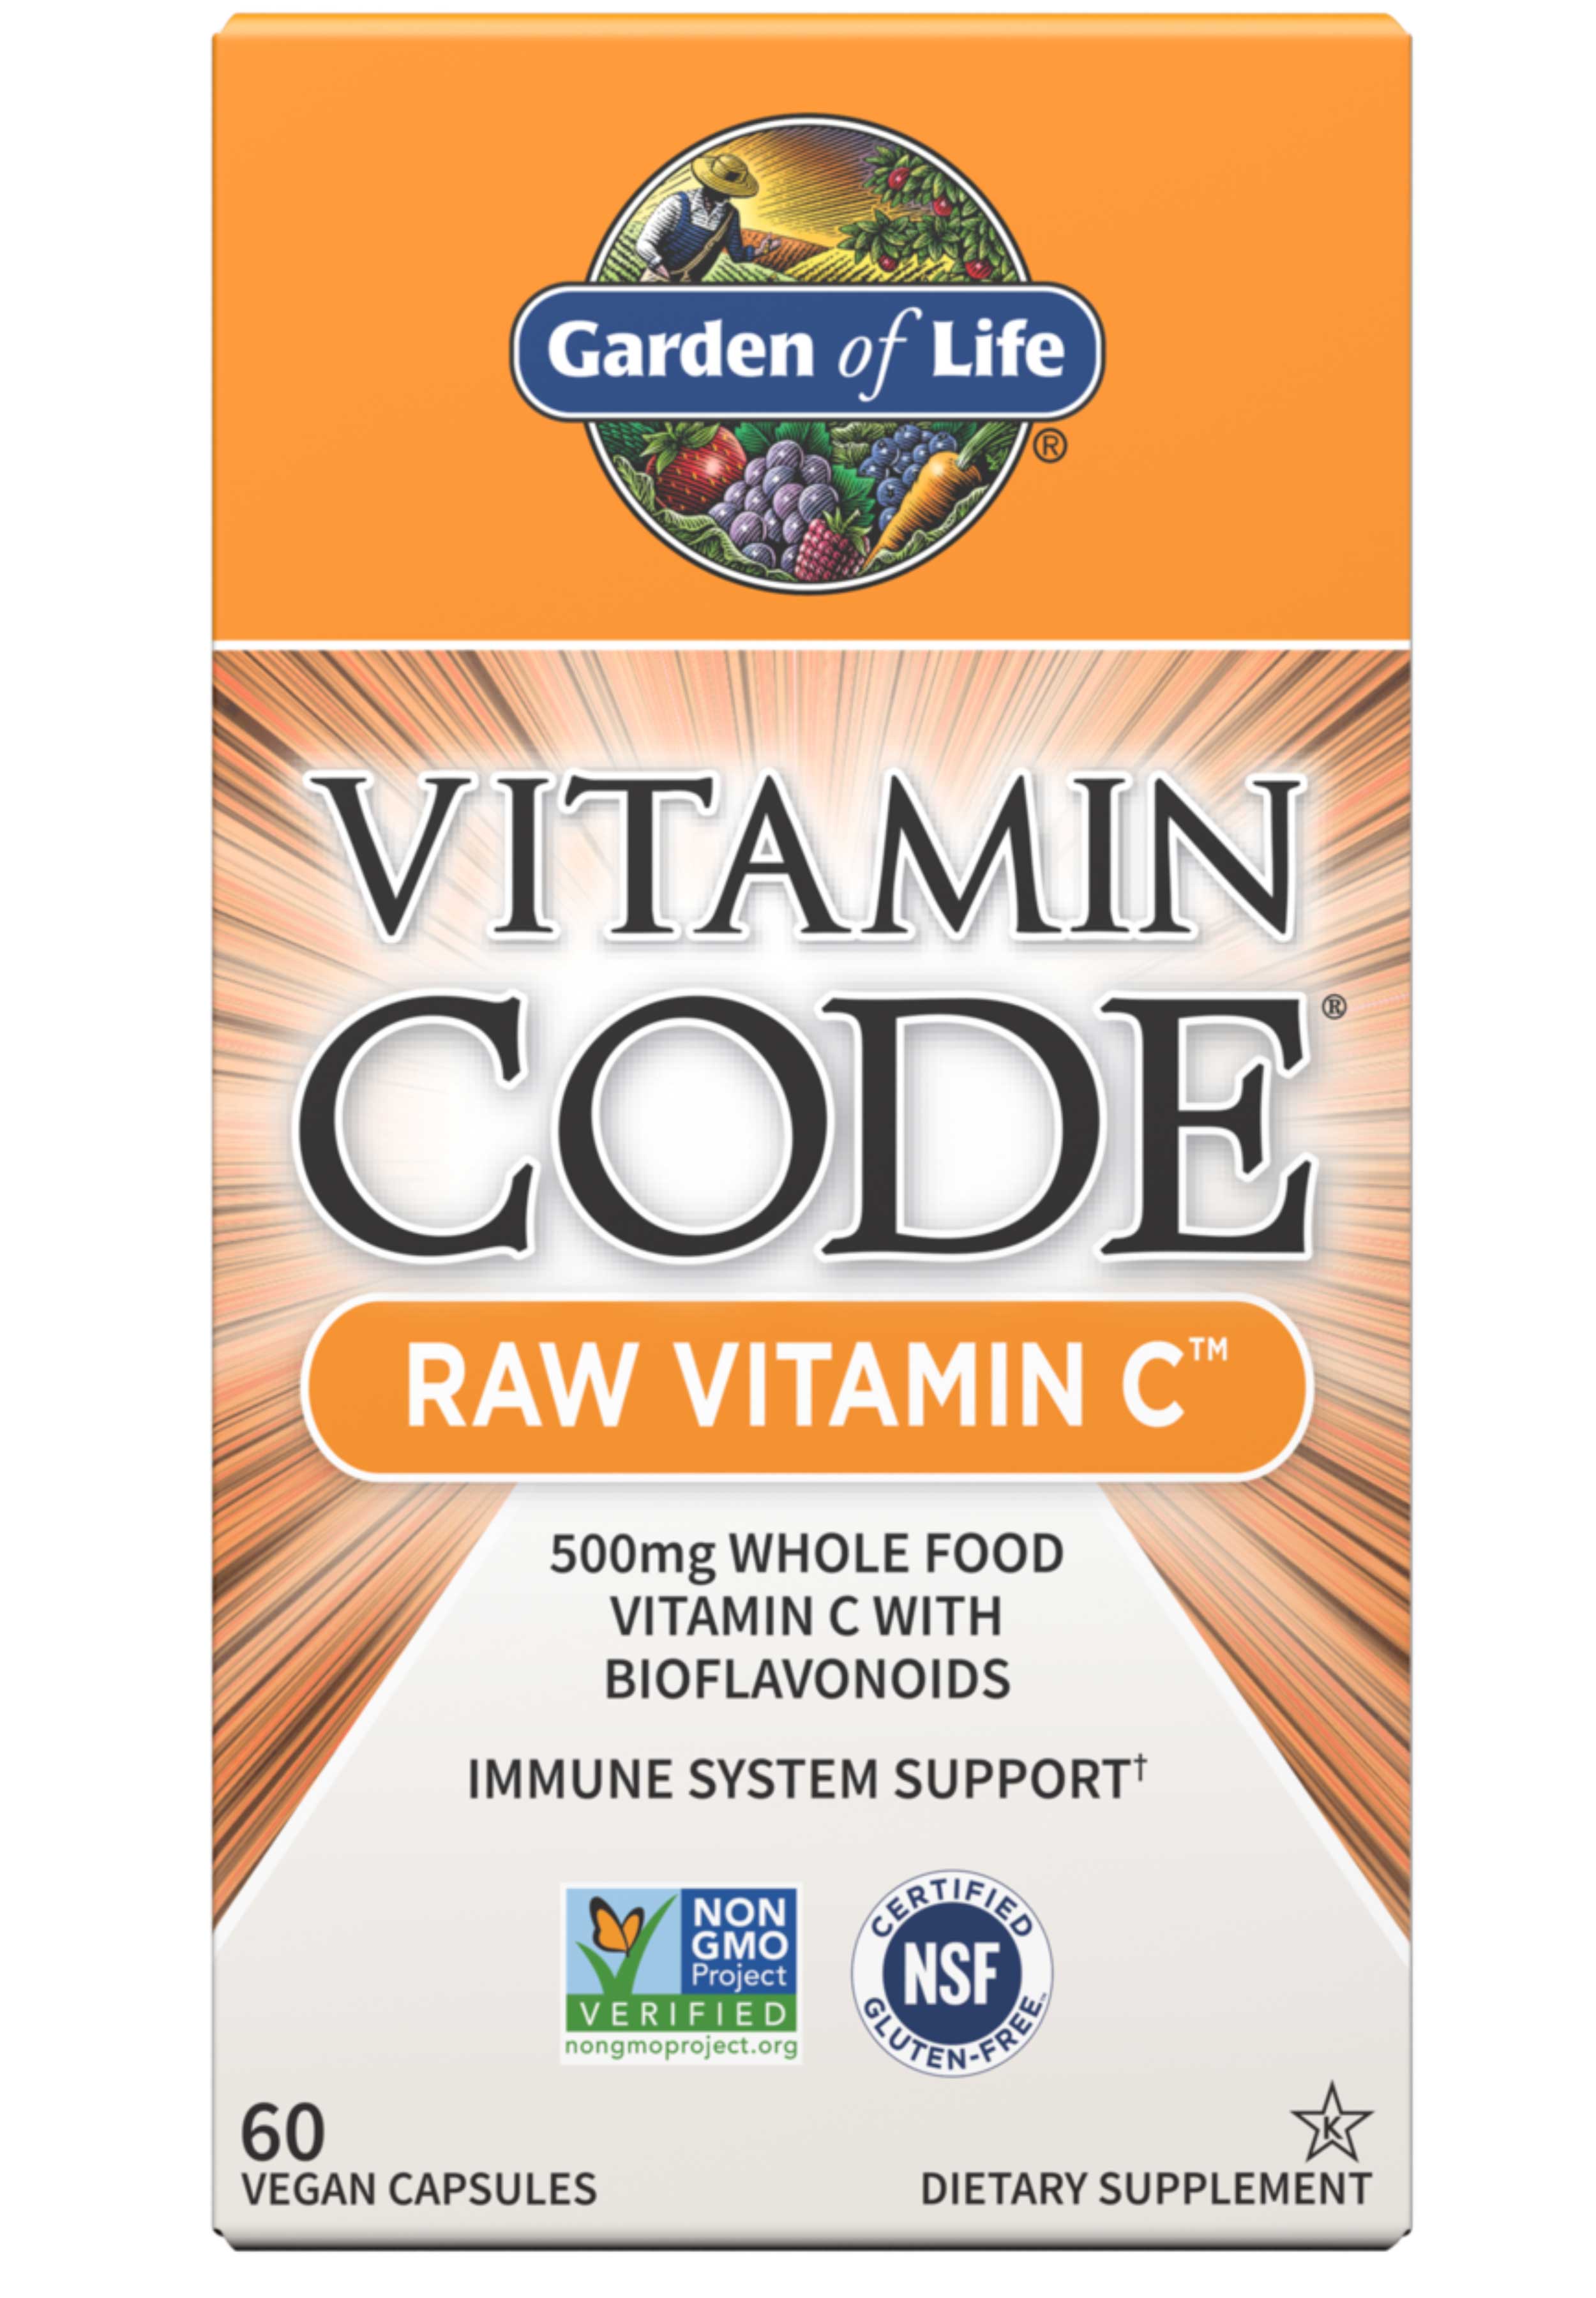 Garden of Life Vitamin Code RAW Vitamin C